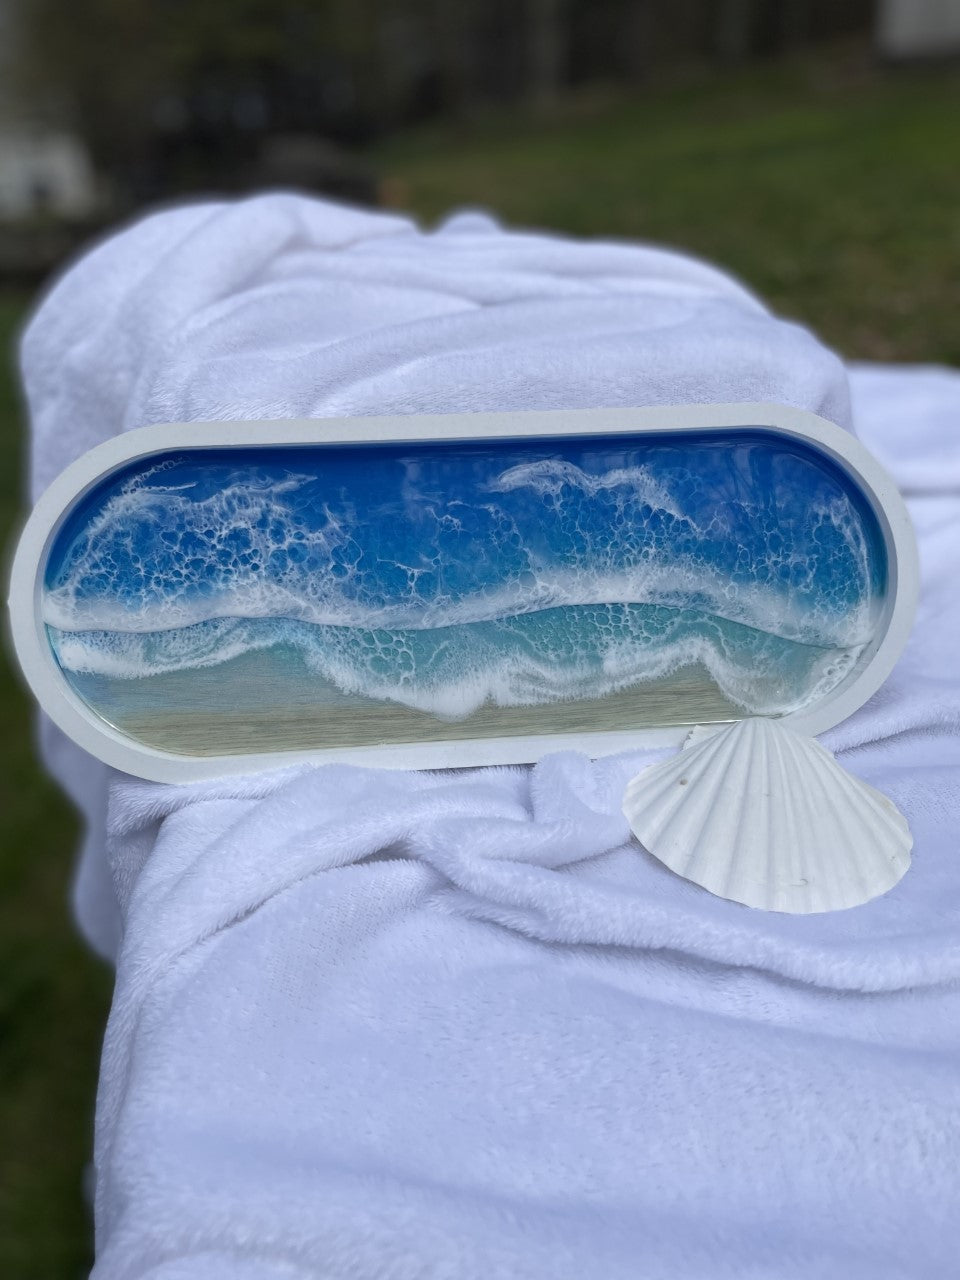 Resin ocean and beach vanity tray | Home decor